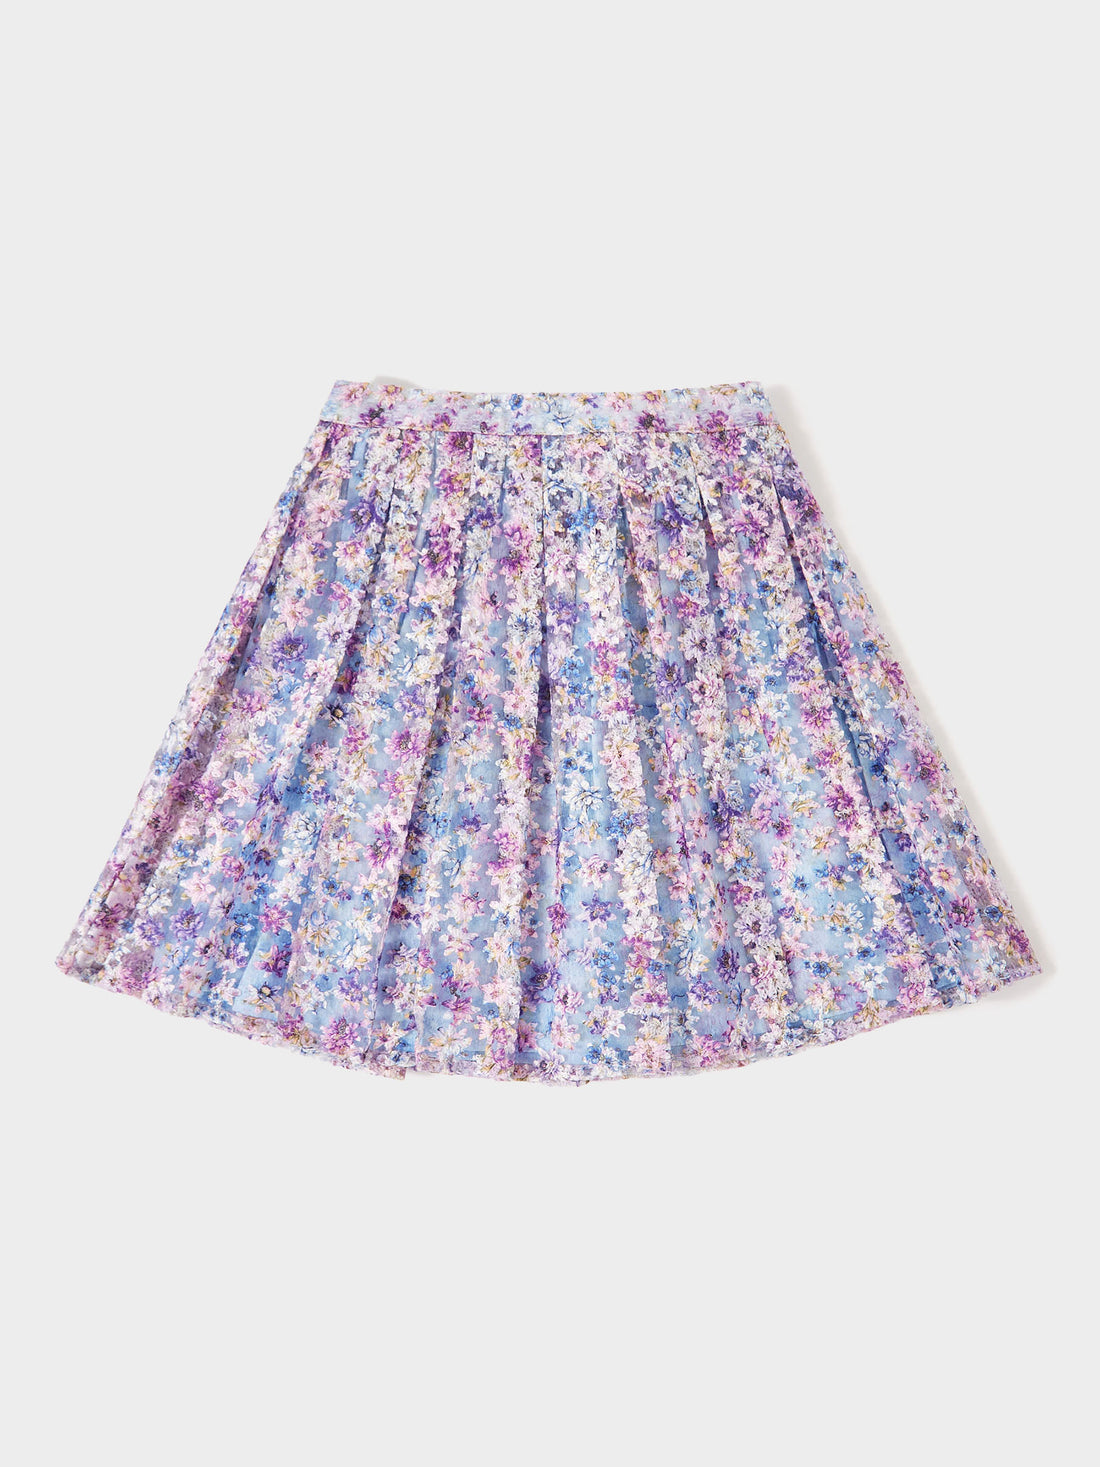 Jaytona Lace Skirt